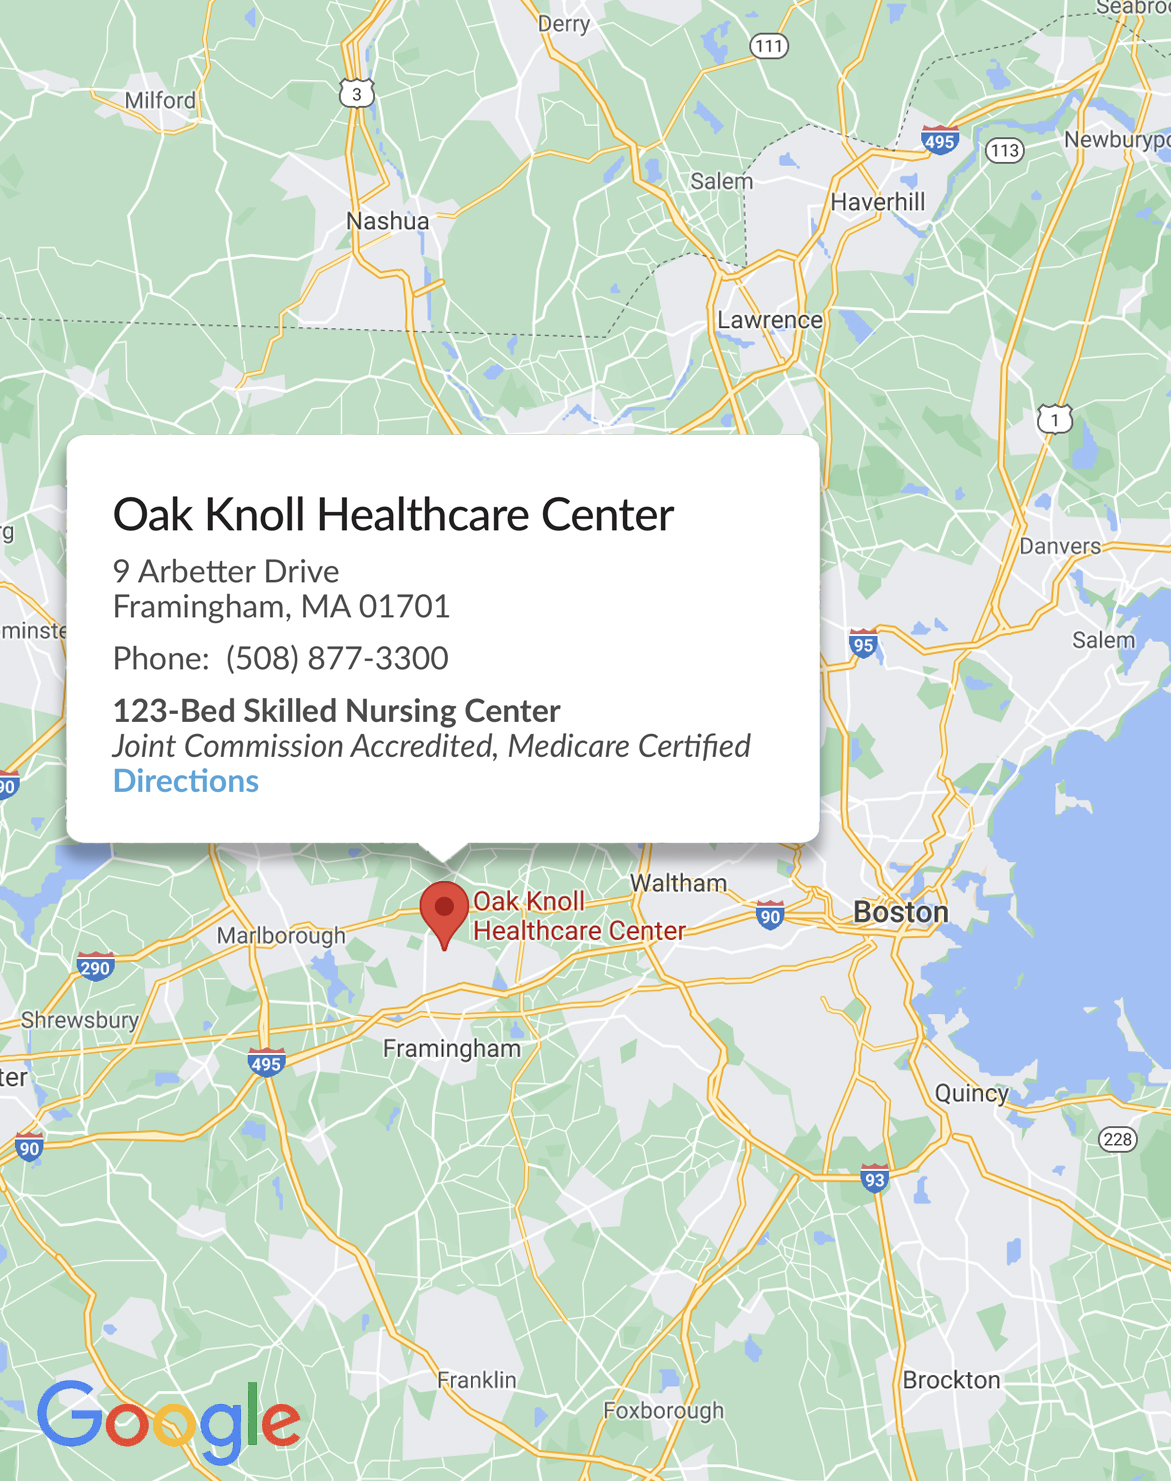 Skilled Nursing Facility, Oak Knoll Healthcare Center Framingham, MA